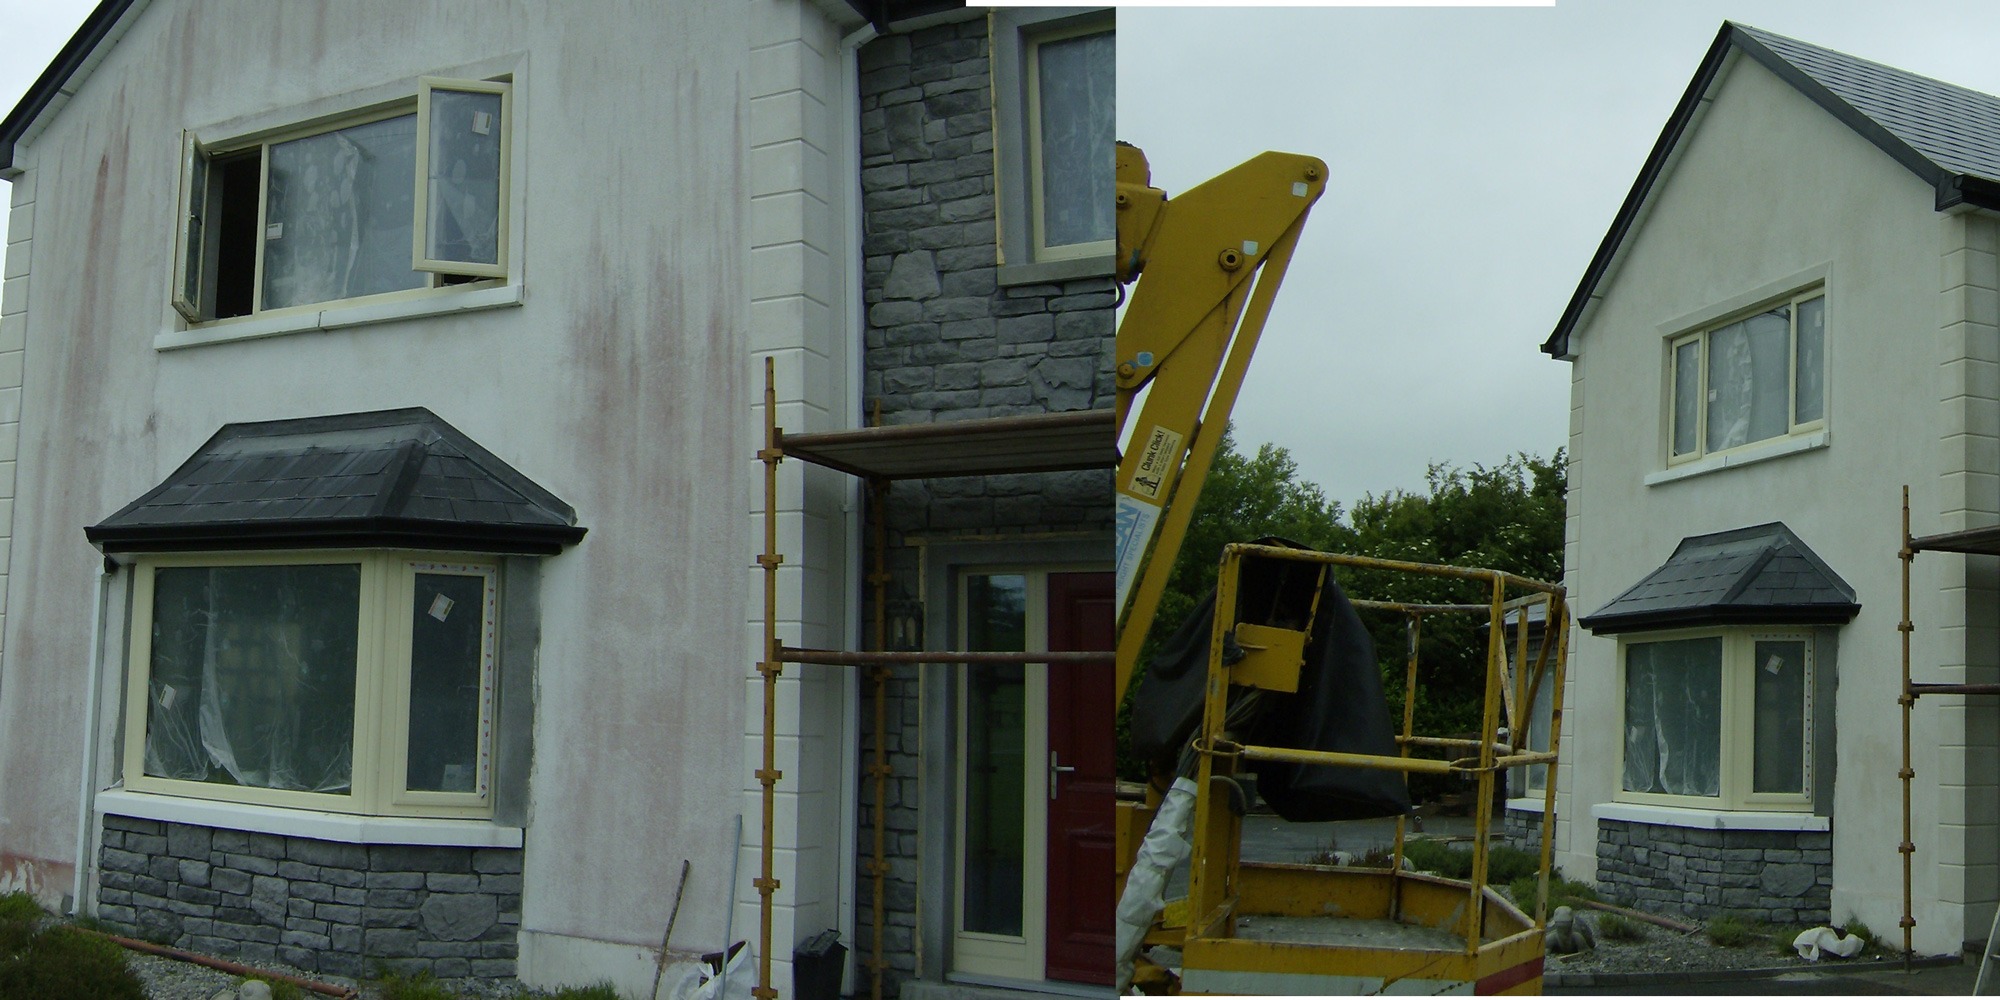 Wall-Cleaning-Services-&-Power-Washing-Mayo,-Sligo,-Roscommon,-Galway-Ireland